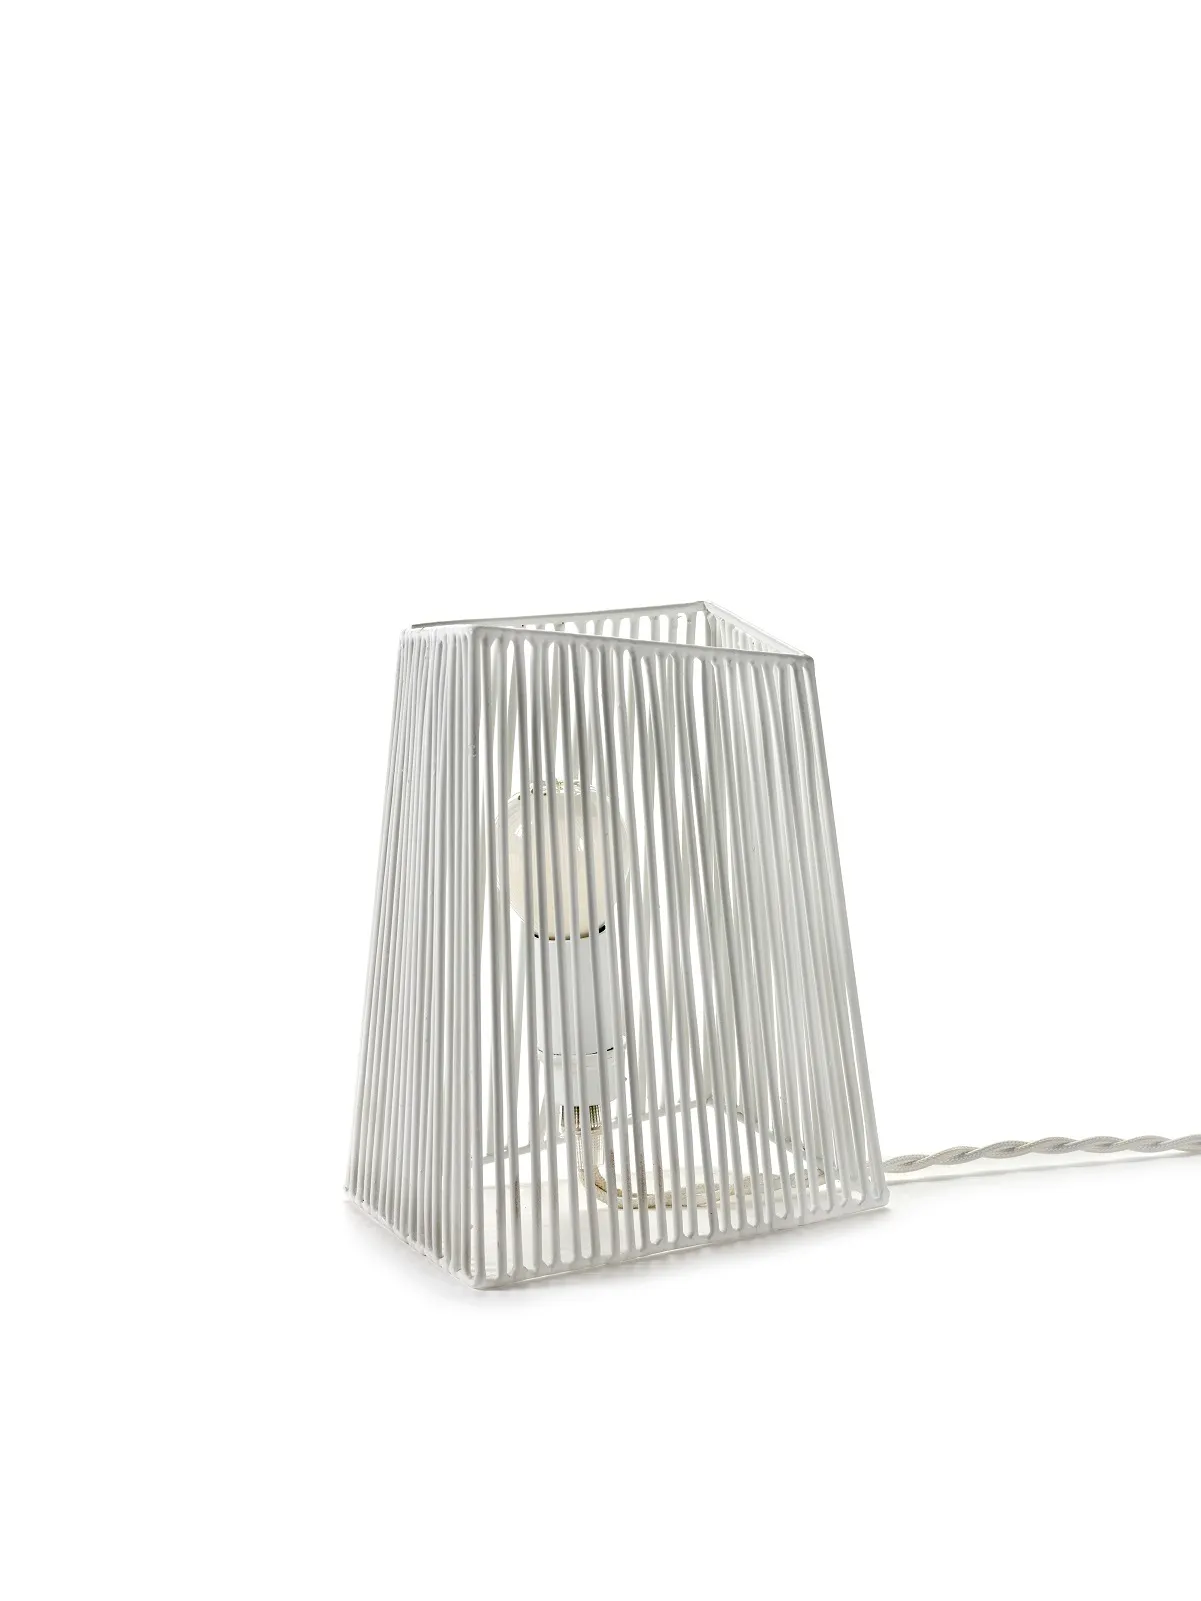 Wall/Table Lamp M Ombre White L 17 W 12.5 H 20CM by Antonino Sciortino